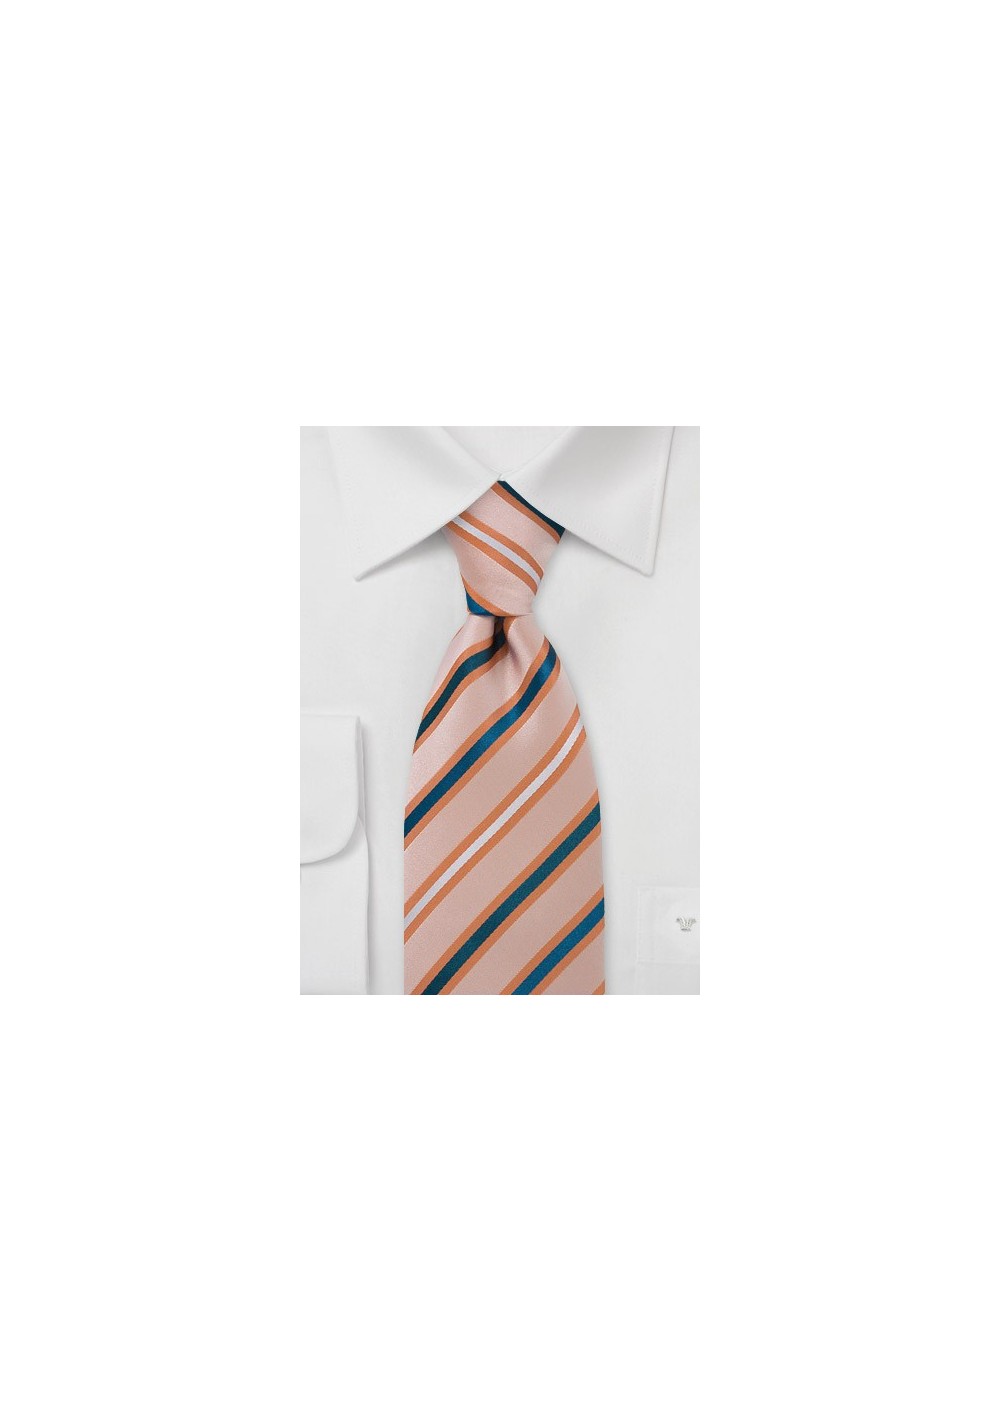 Peach and Blue Striped Tie